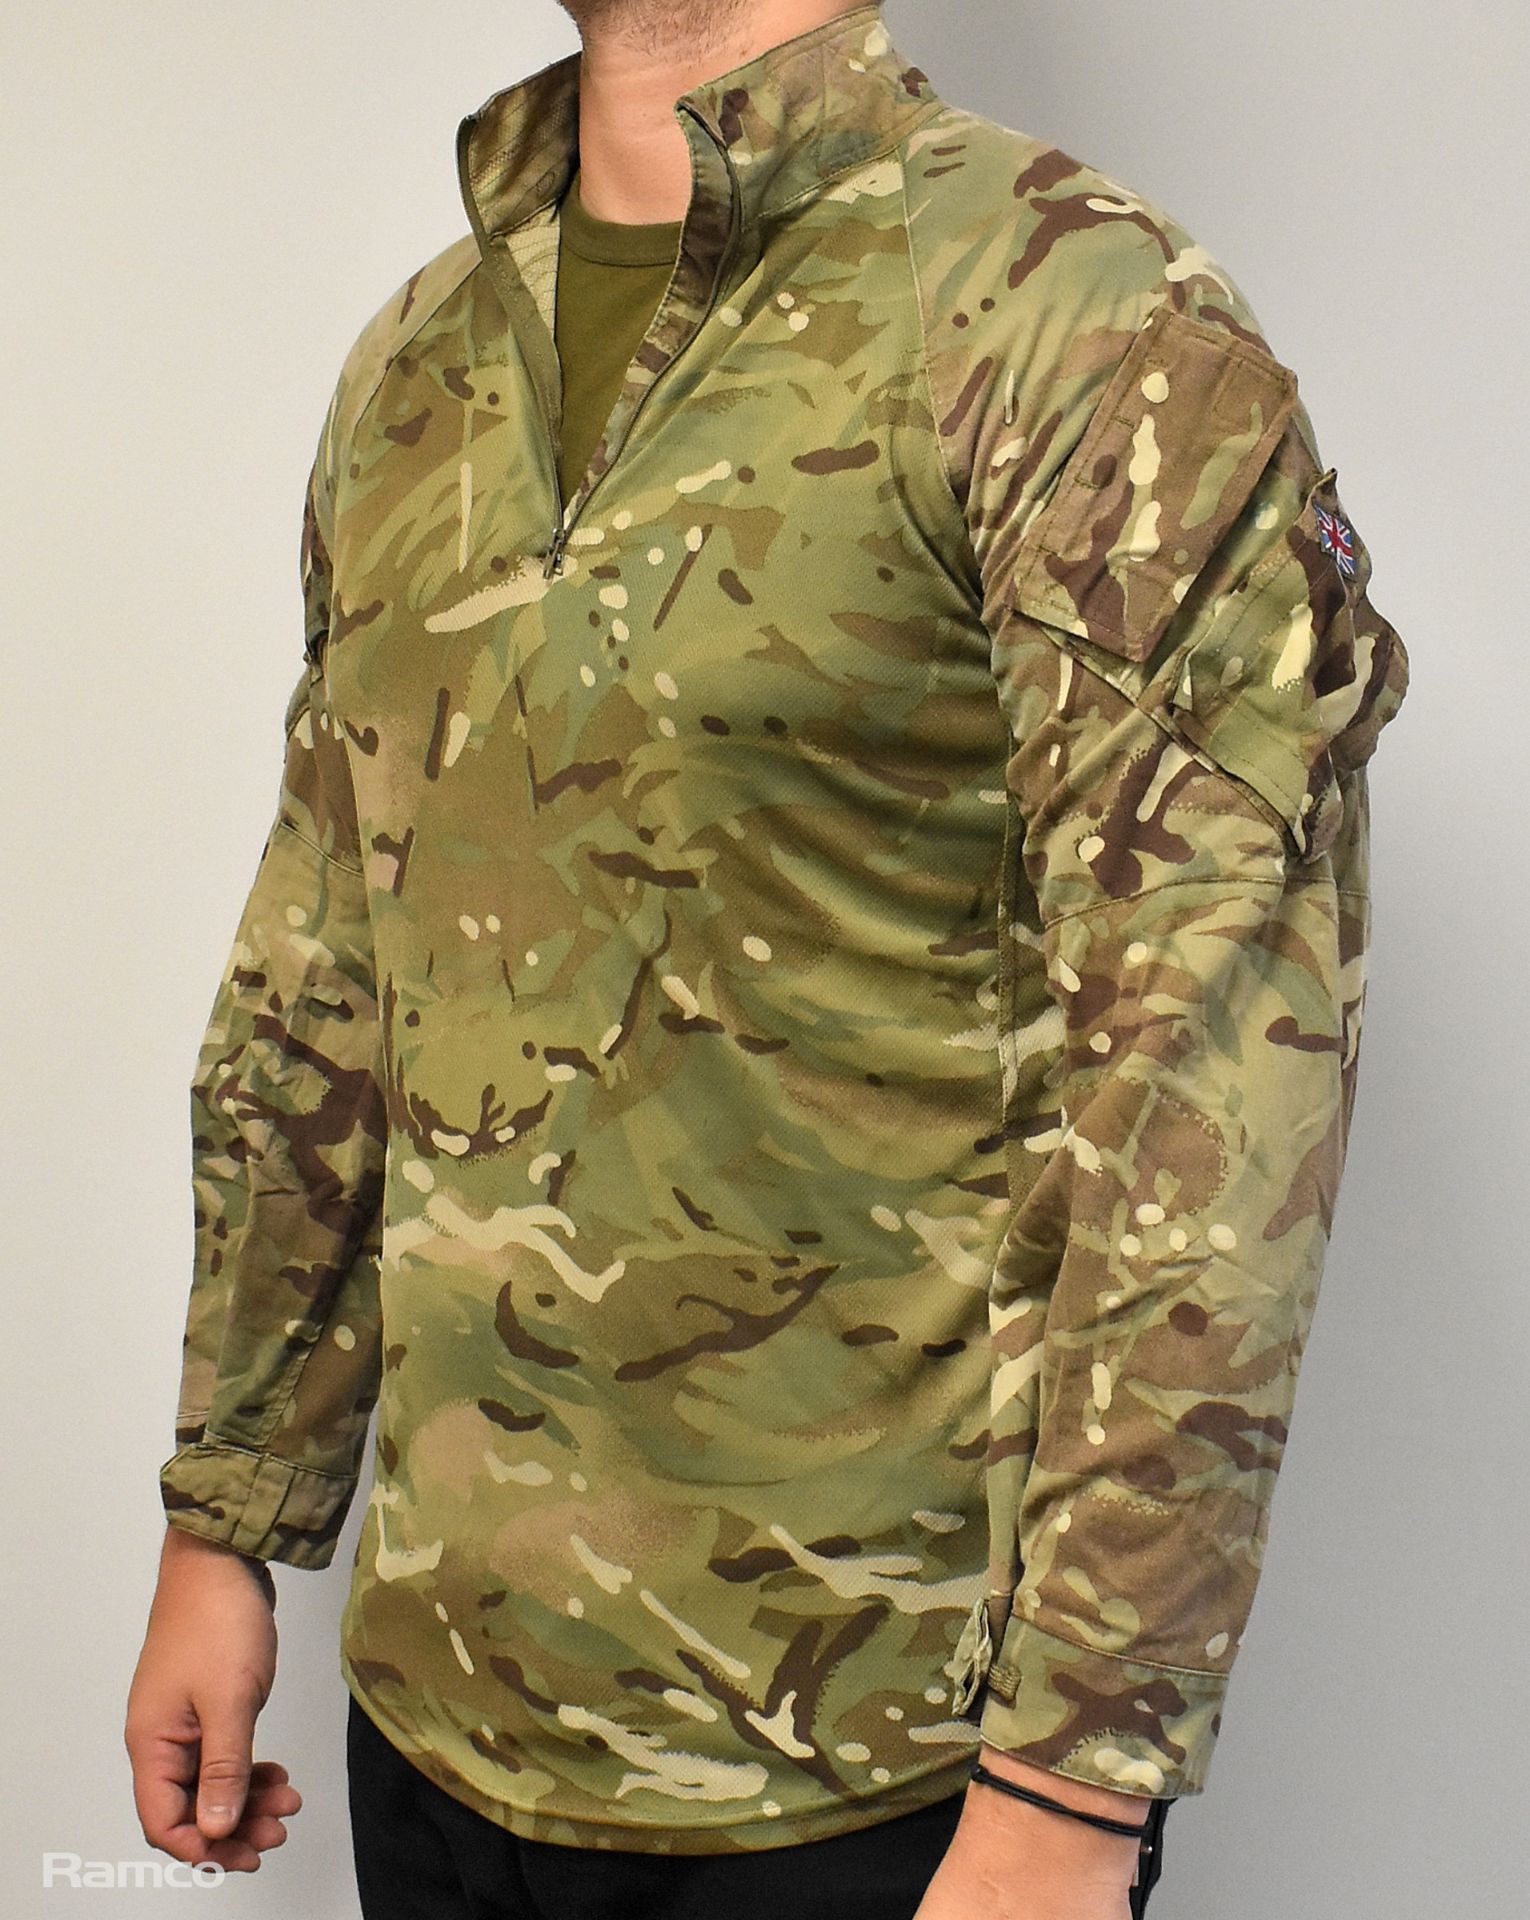 80x British Army MTP UBAC's shirts - mixed types - mixed grades and sizes - Image 2 of 12